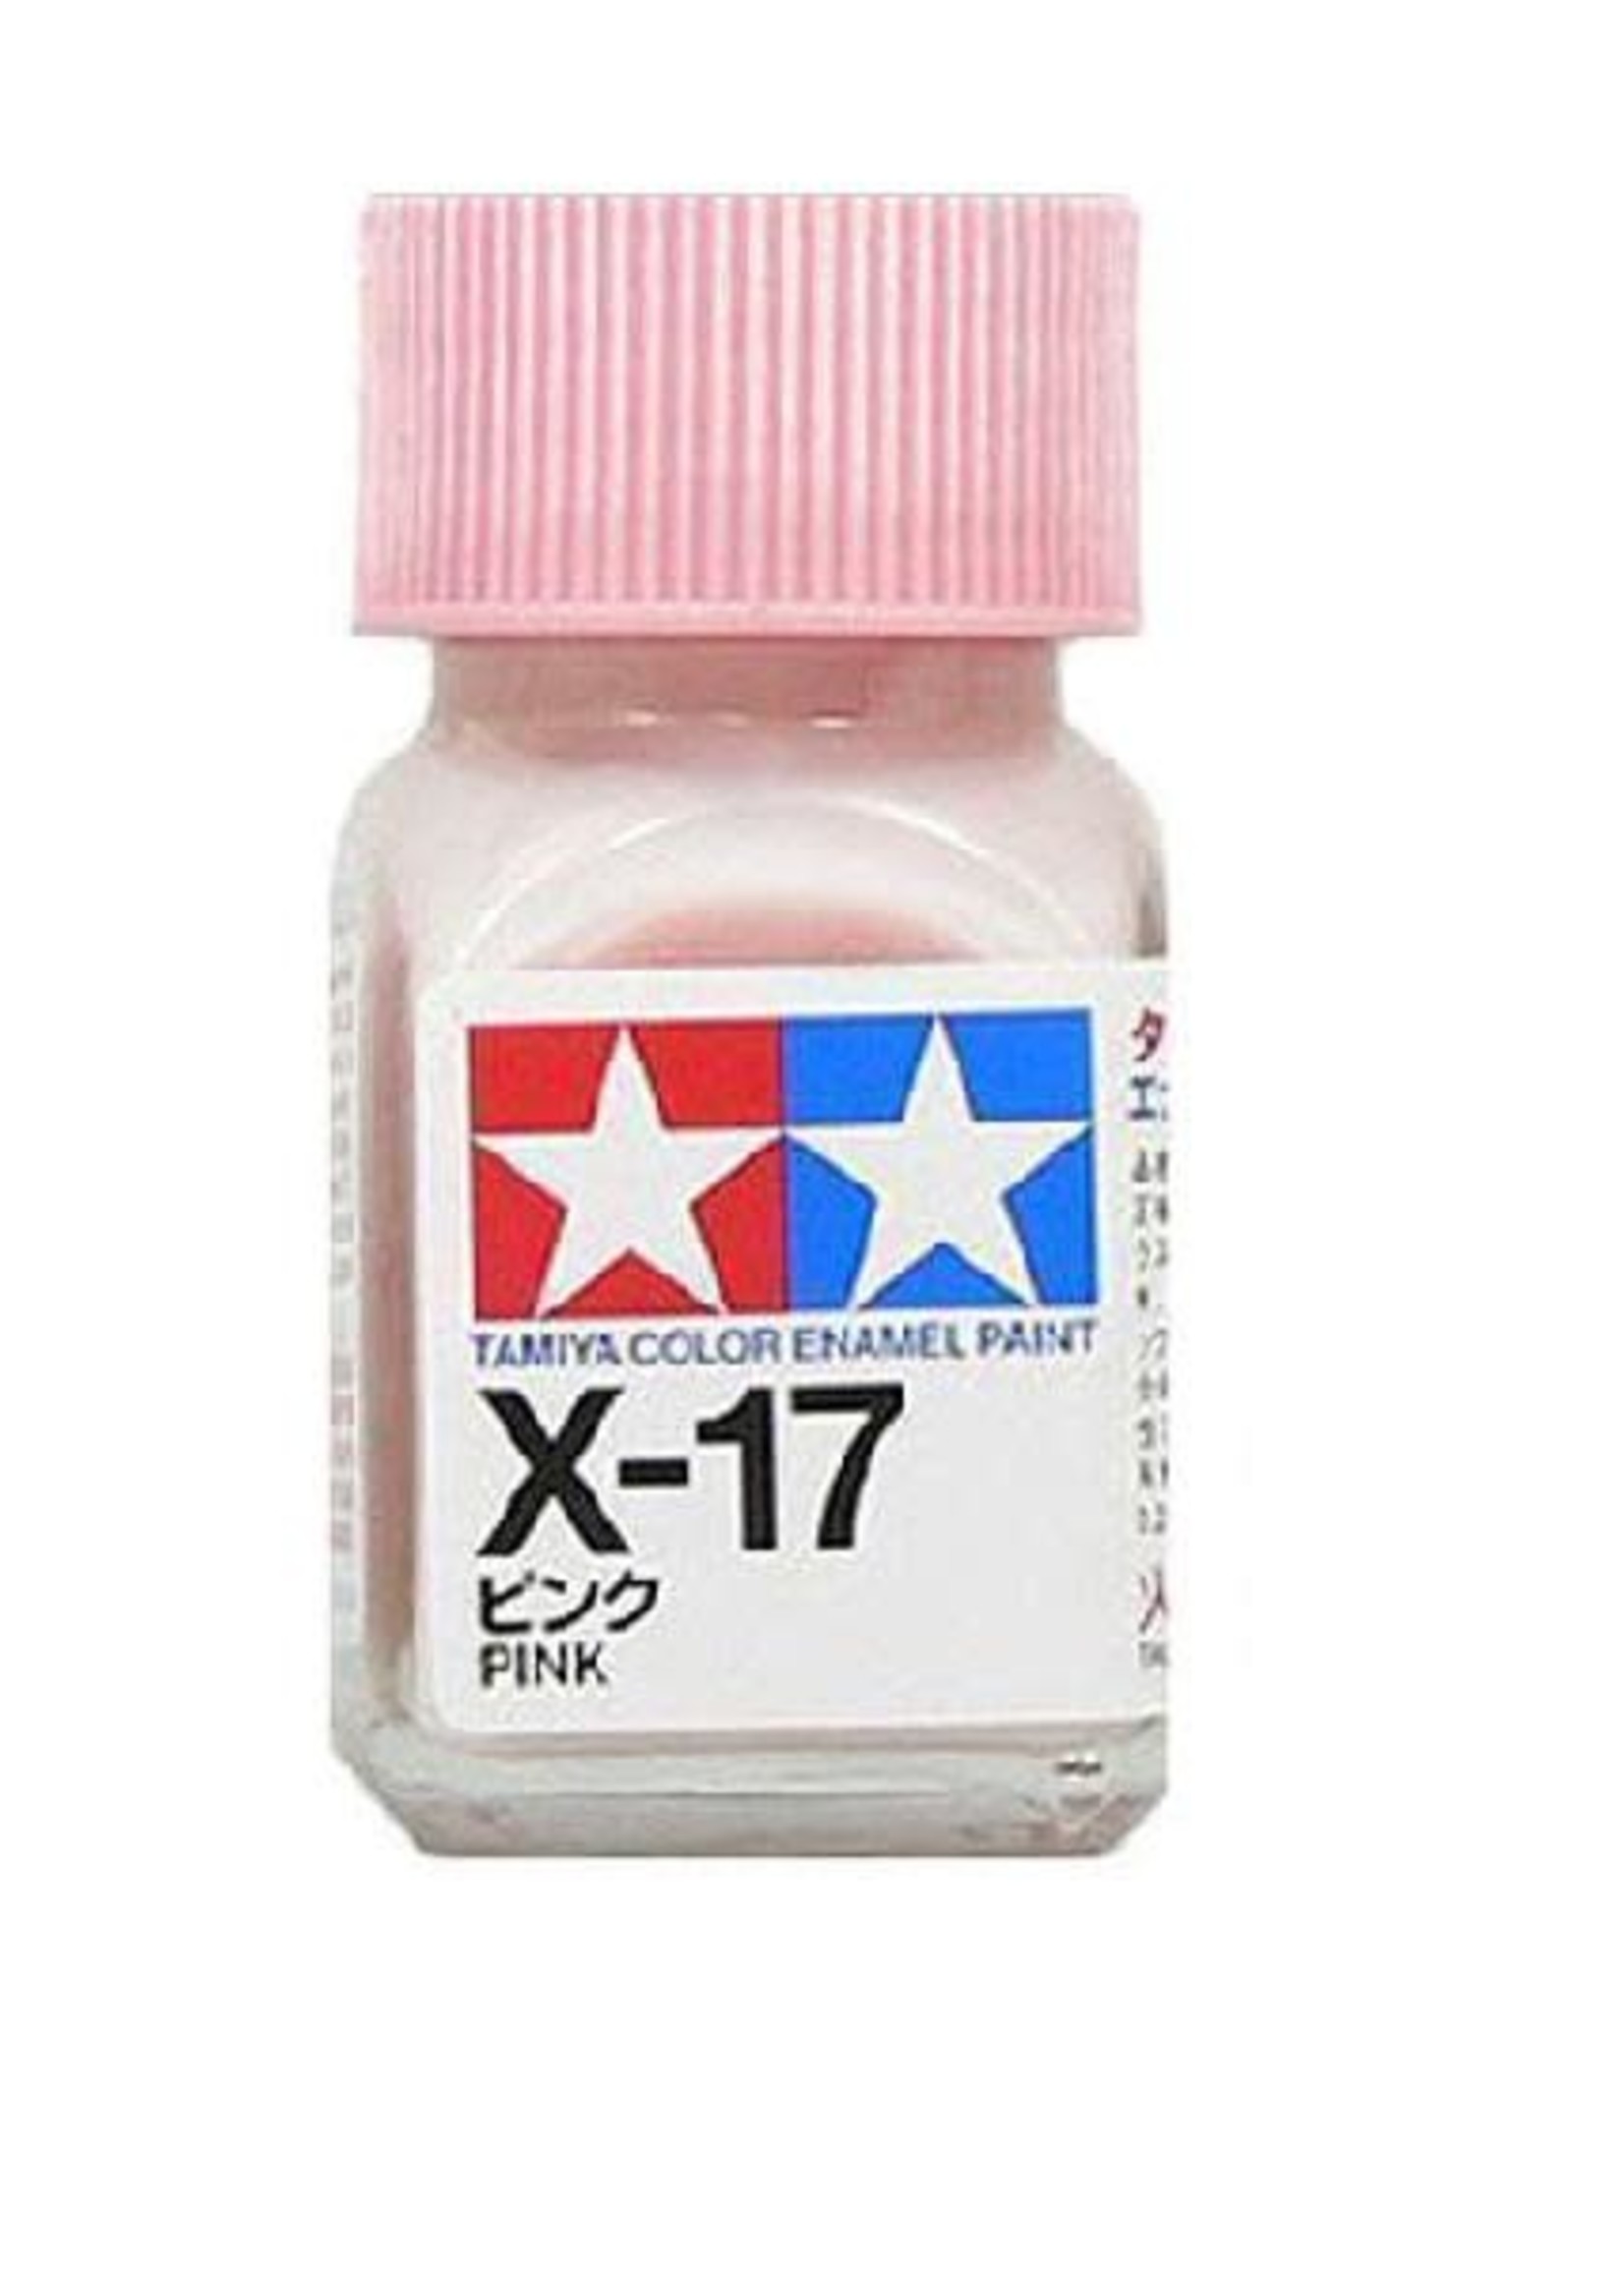 Tamiya Tamiya color enamel paint - X-17 - Pink